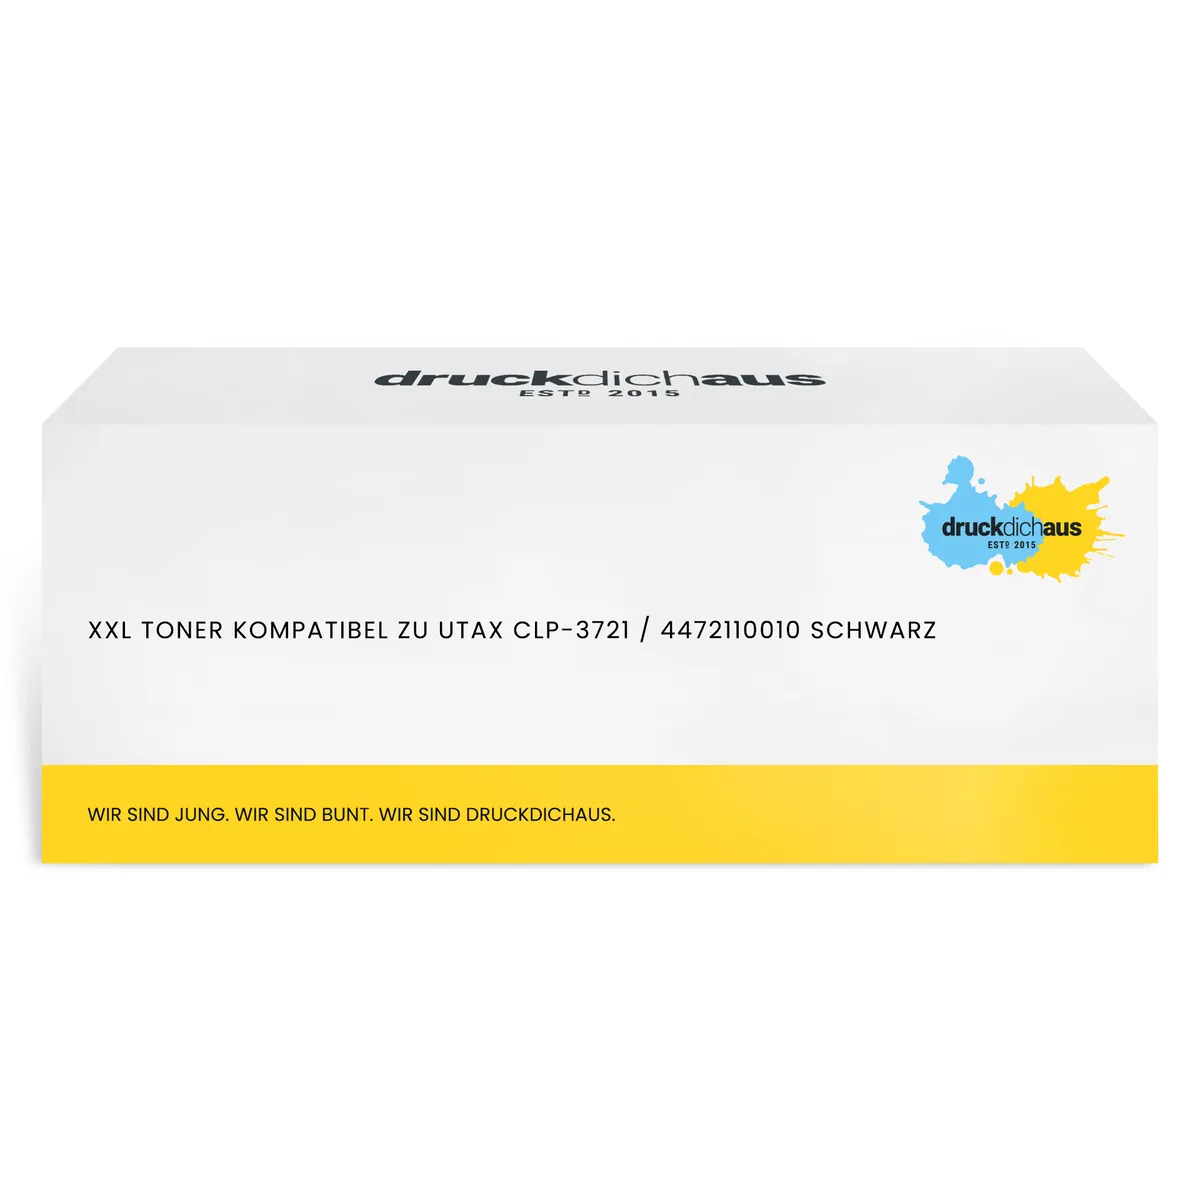 XXL Toner kompatibel zu Utax CLP-3721 / 4472110010 schwarz